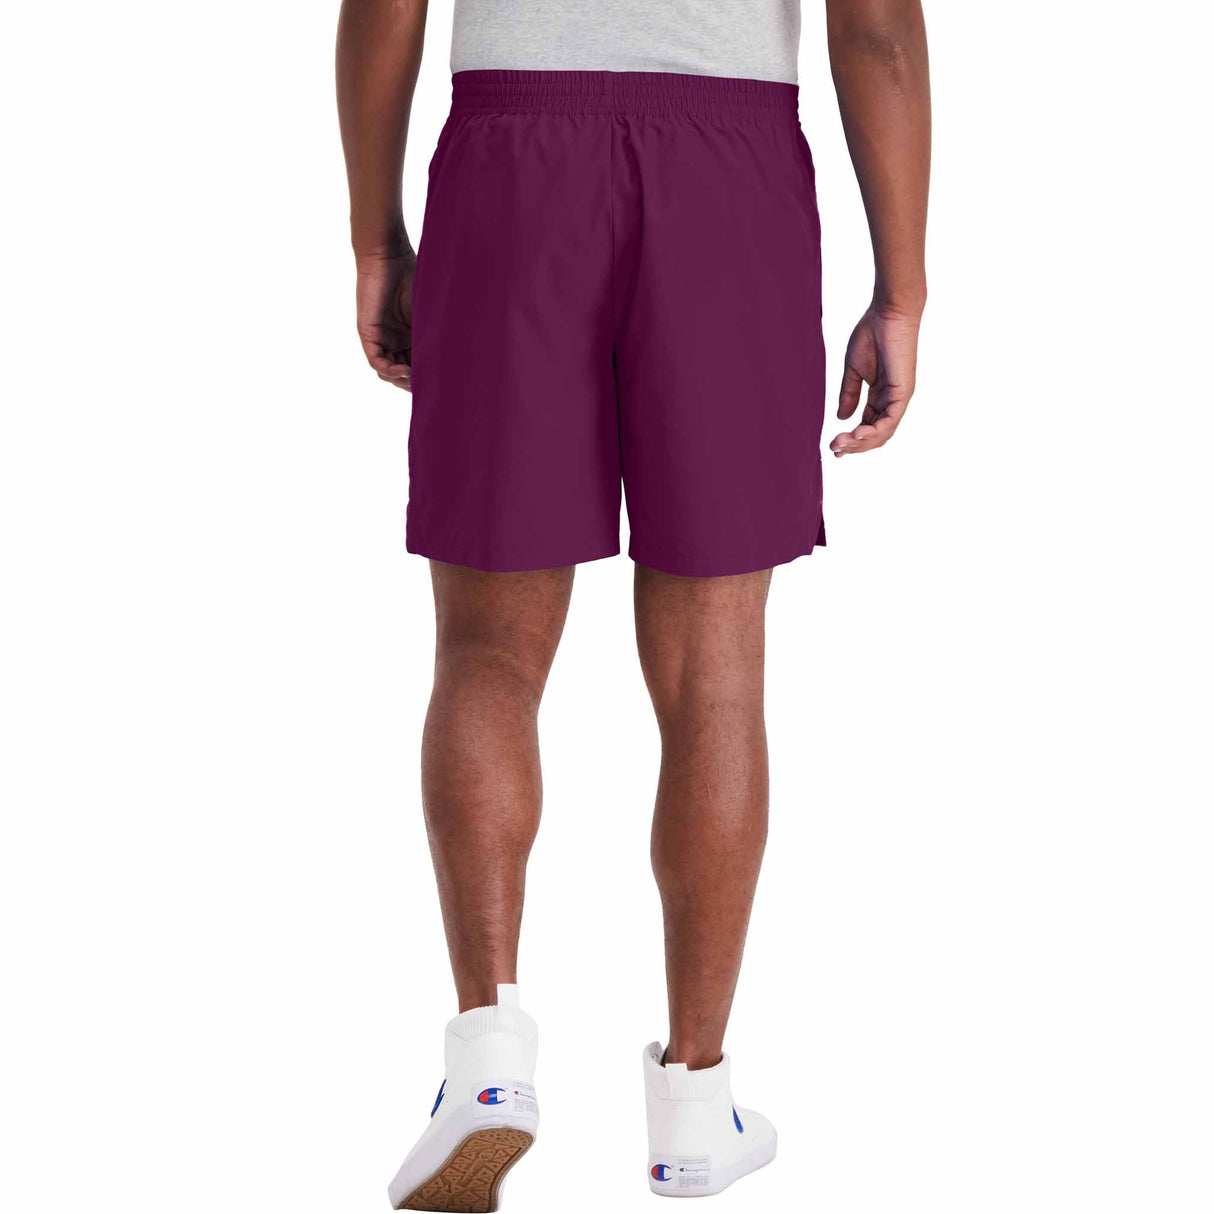 Champion 7 Inch Woven Sport Shorts W/Out Liner short sans doublure pour homme - Dark Berry Purple - dos